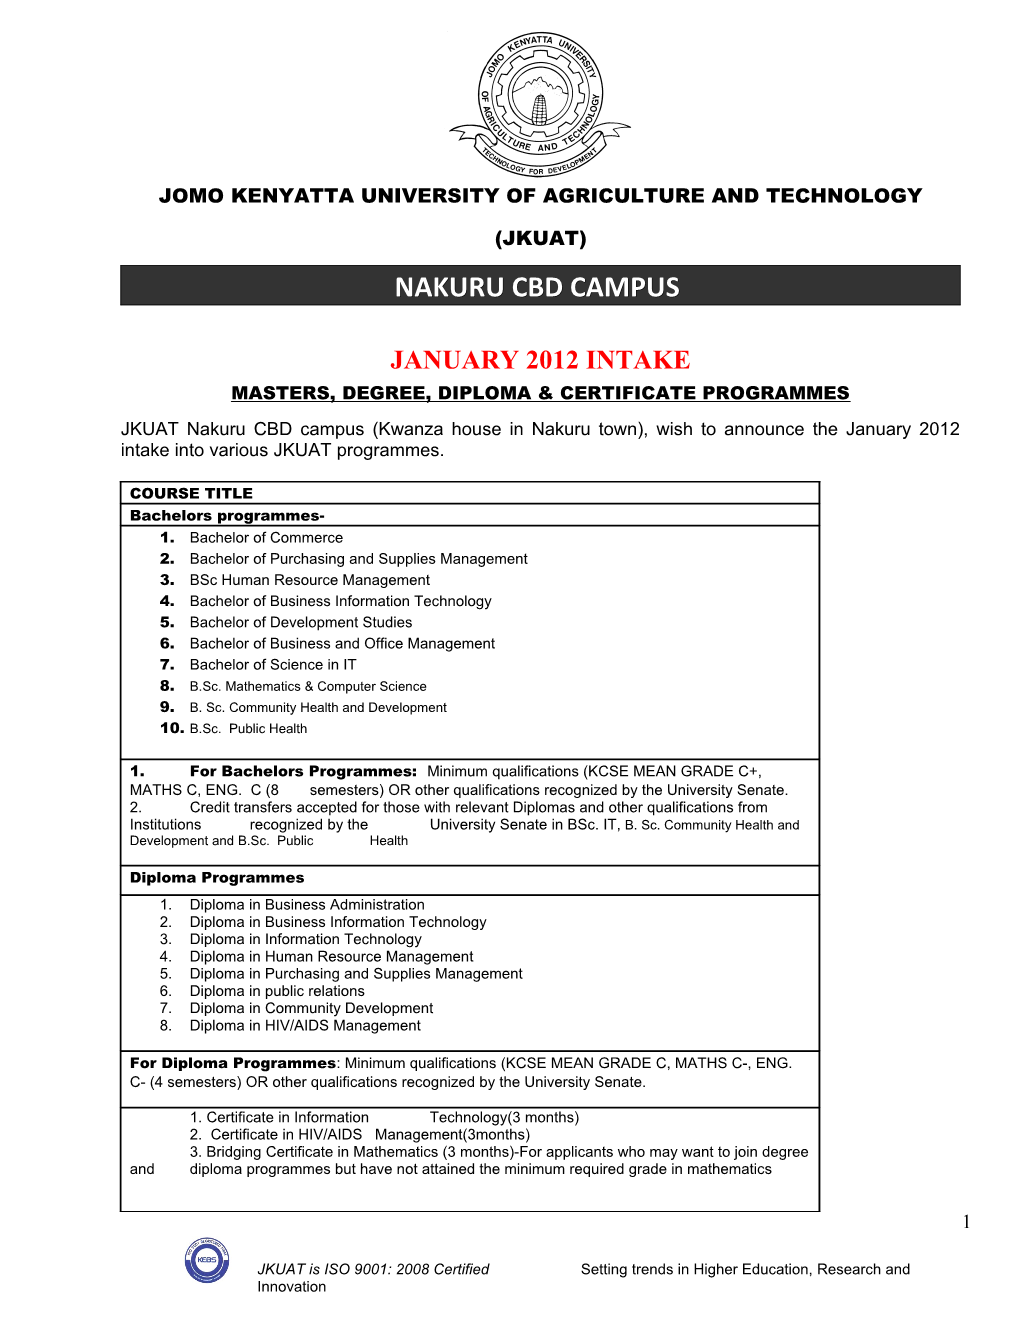 Jomo Kenyatta University